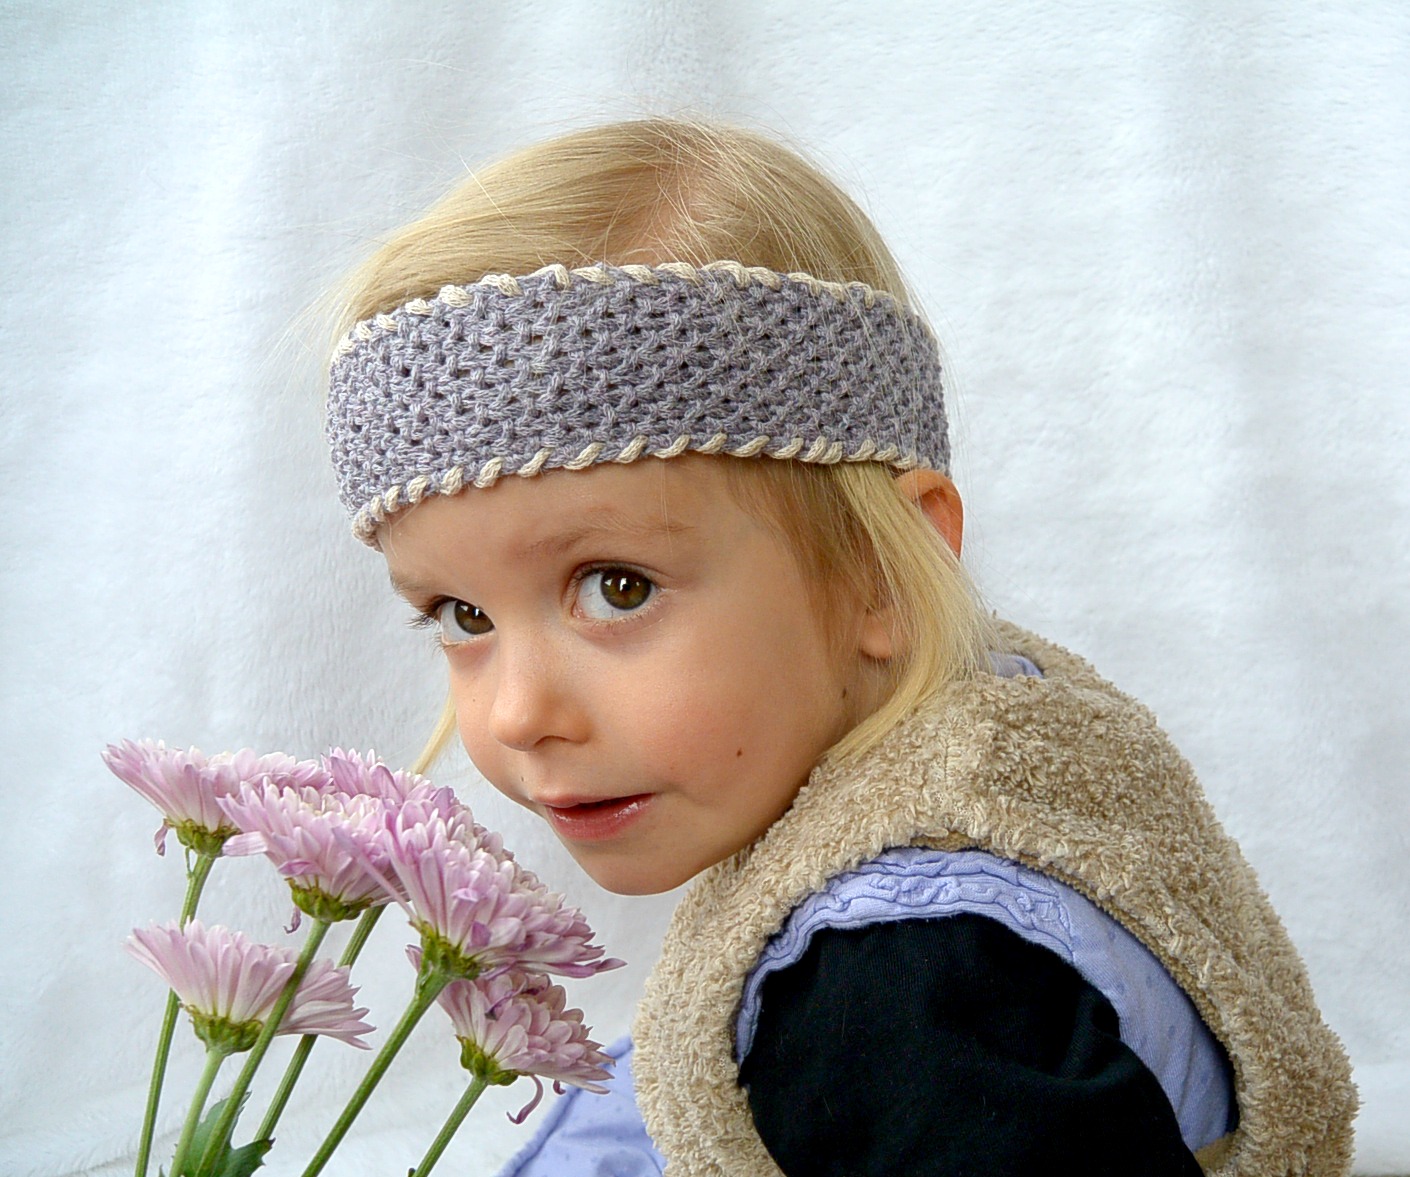 Easy Seed Stitch Headband – Adult or Child